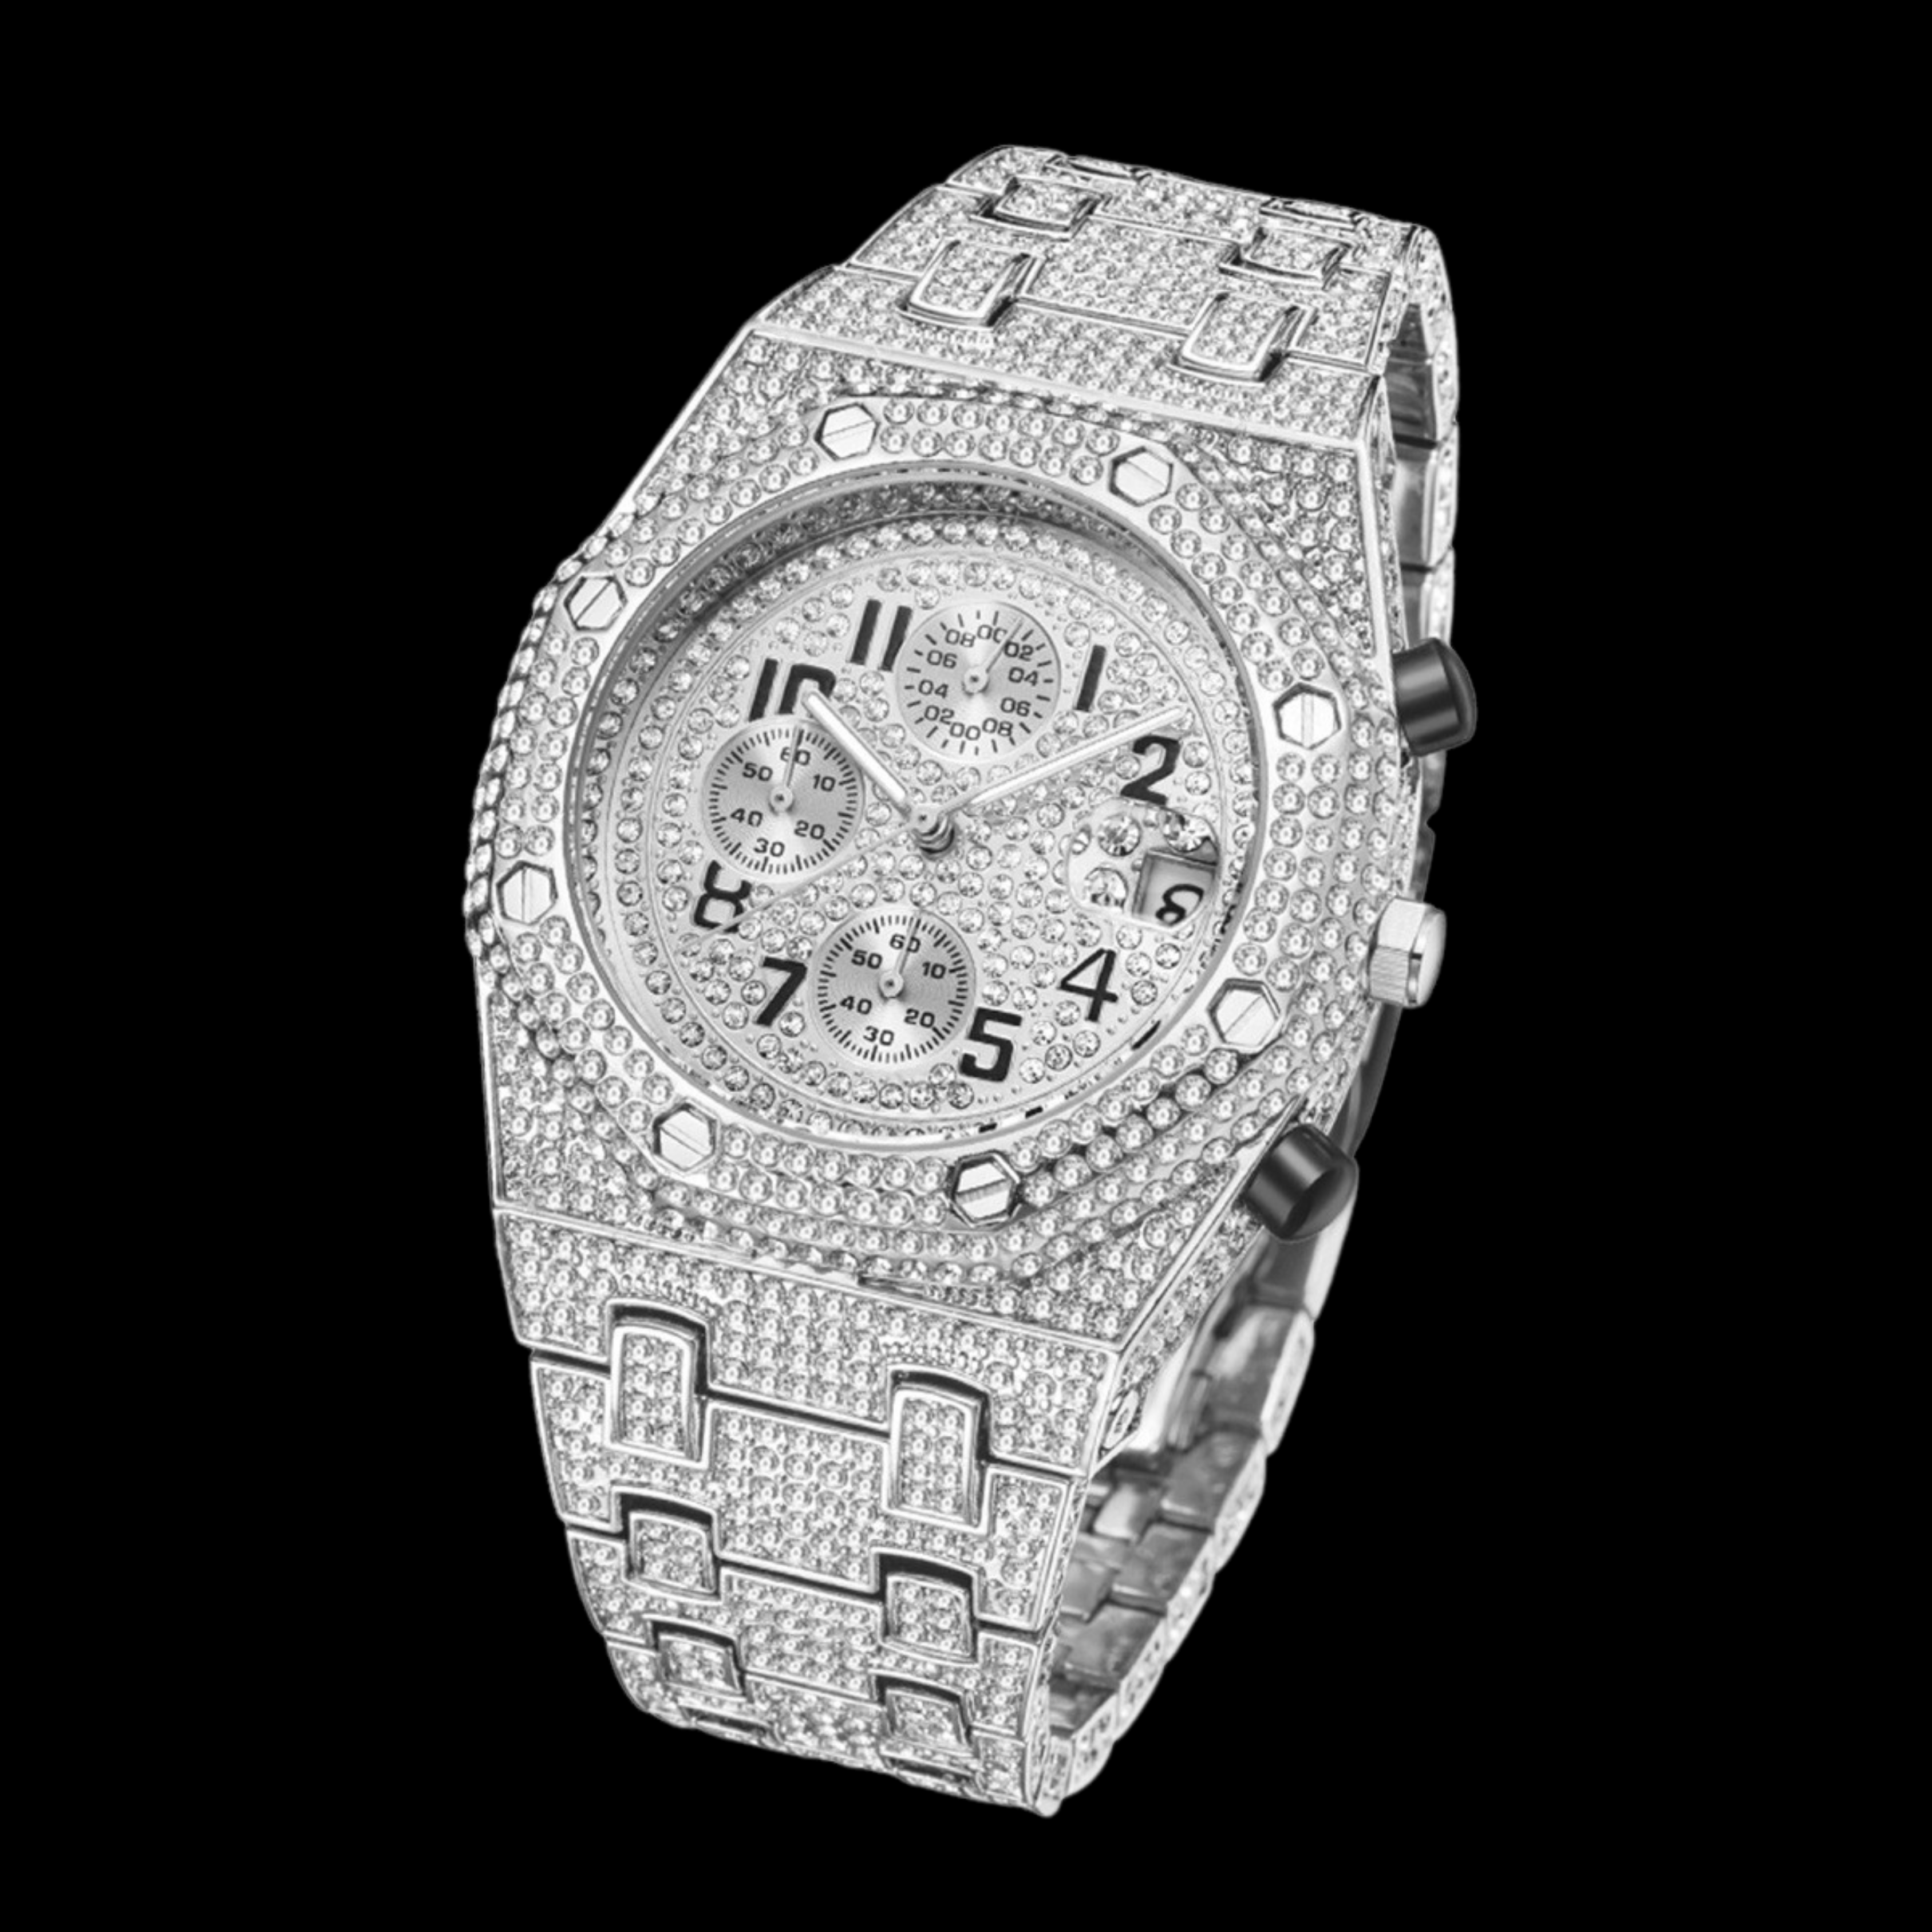 NEW | Special Bustdown Luxury Chrono Date Design VVS Watch